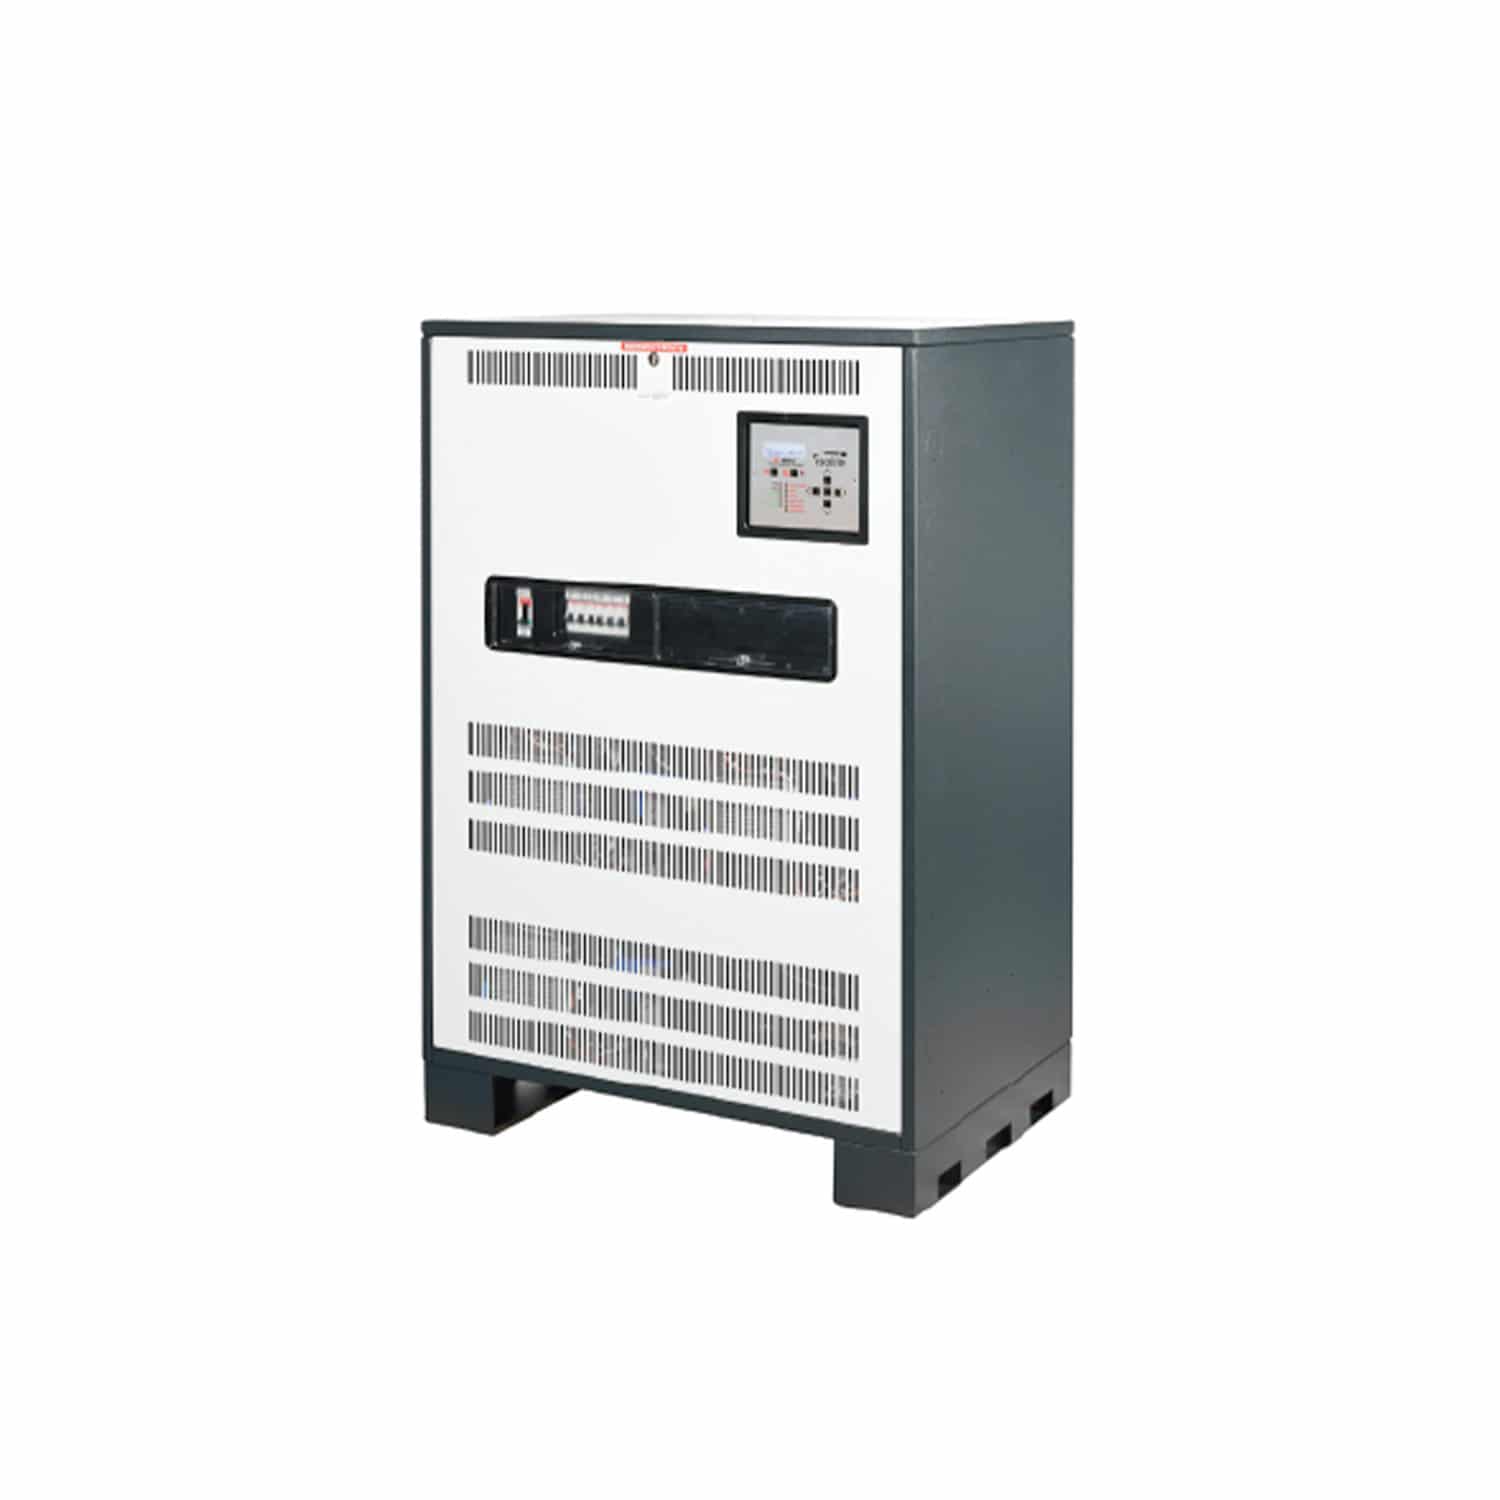 The E3MAC-3P 3,000 -18,000 VA Three Phase Modular AC Inverter offers programmable transfer times.